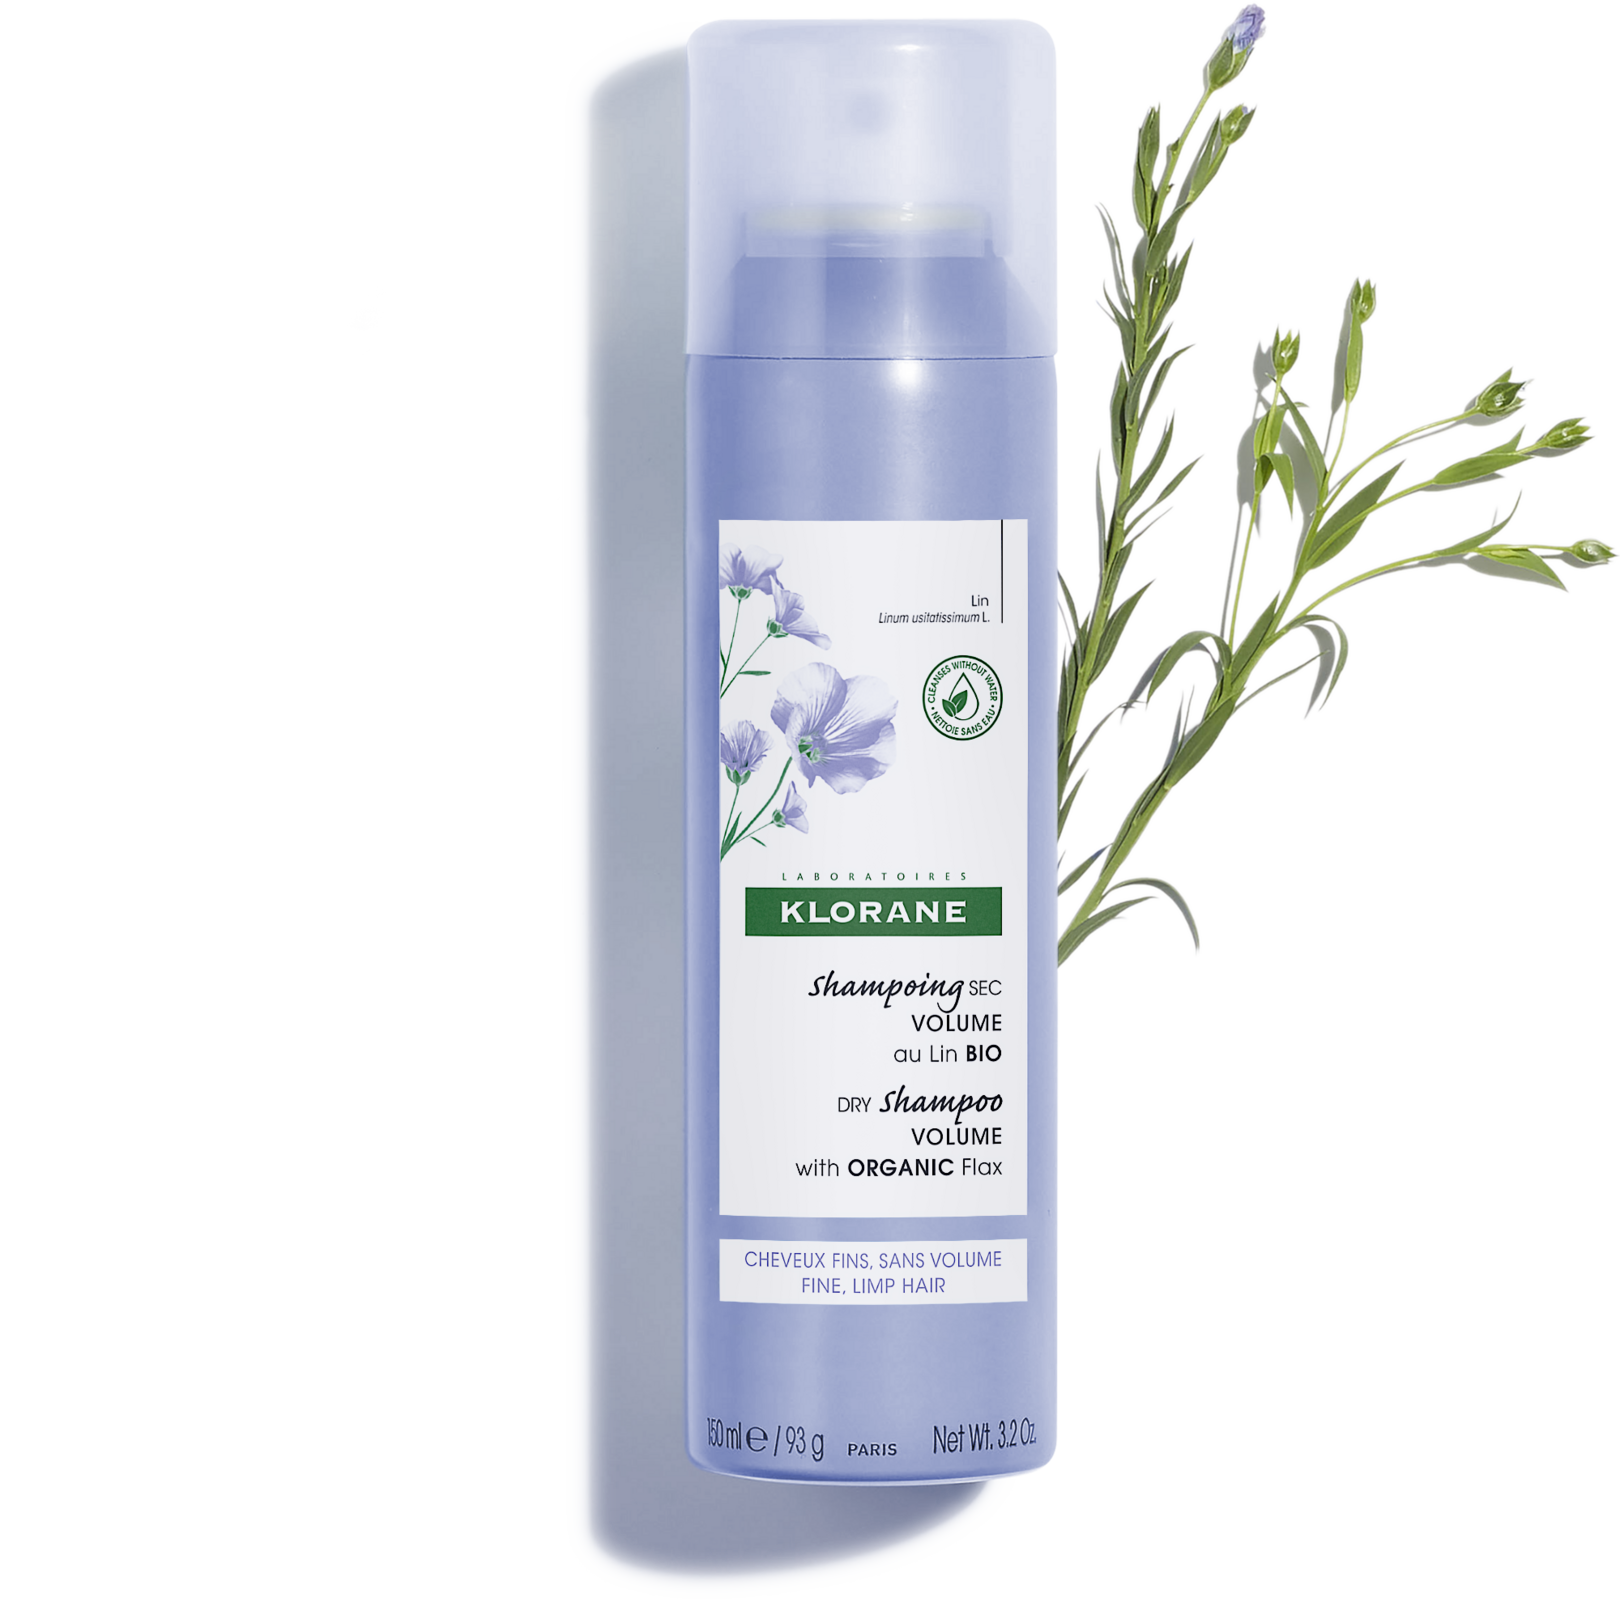 Organic Purifying Shampoo, Dry Hair